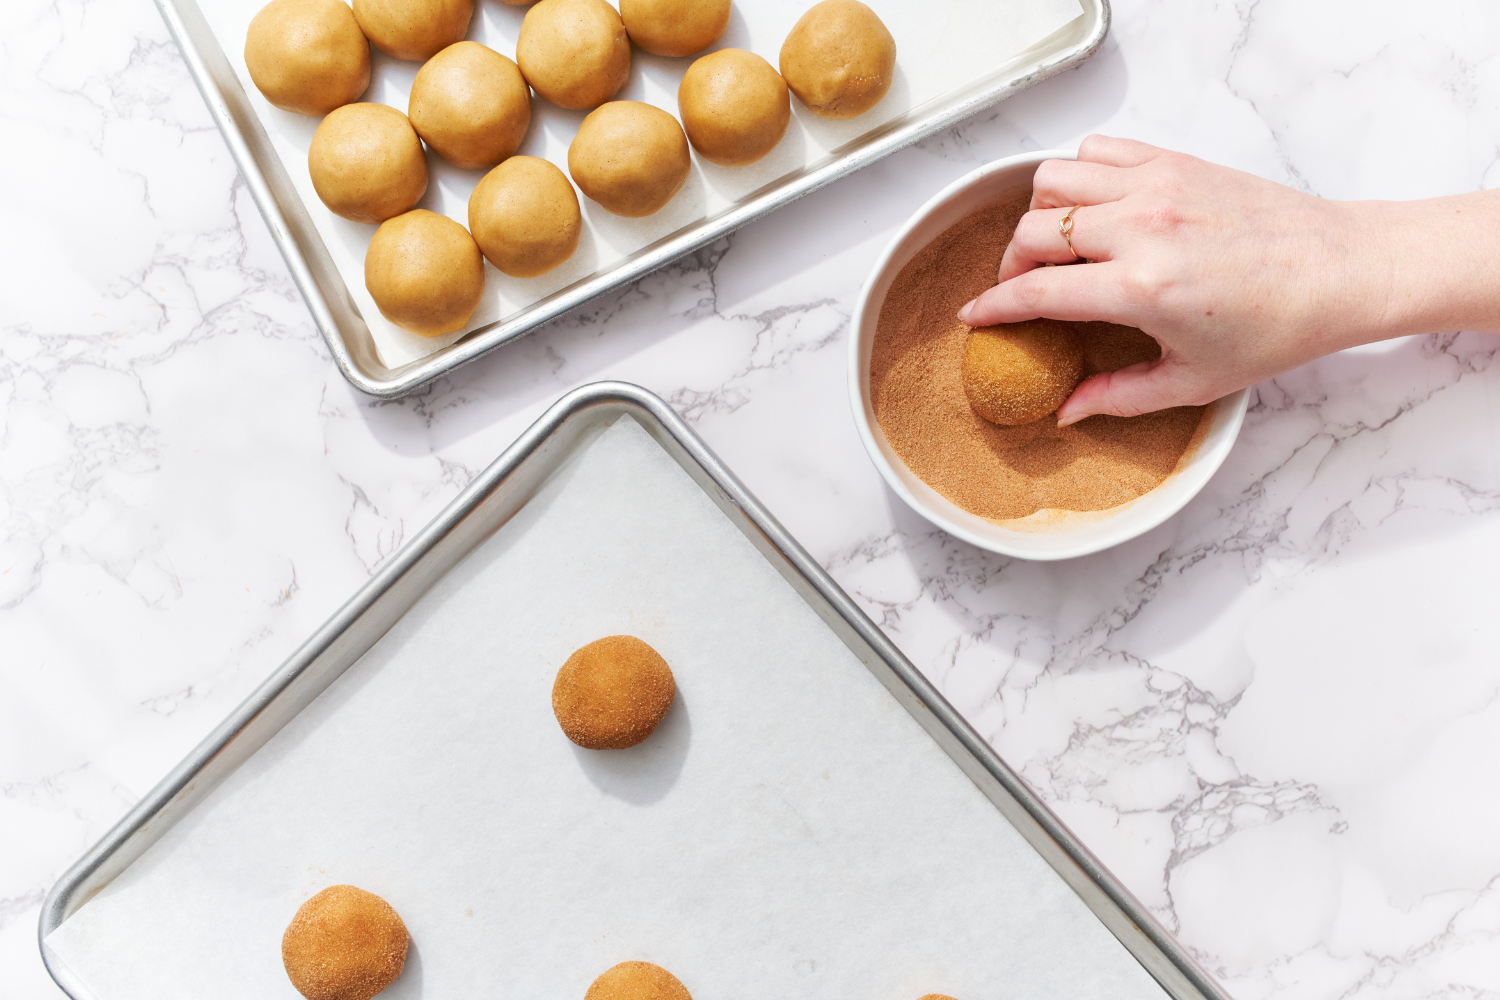 rolling the cookie dough balls in cinnamon sugar.